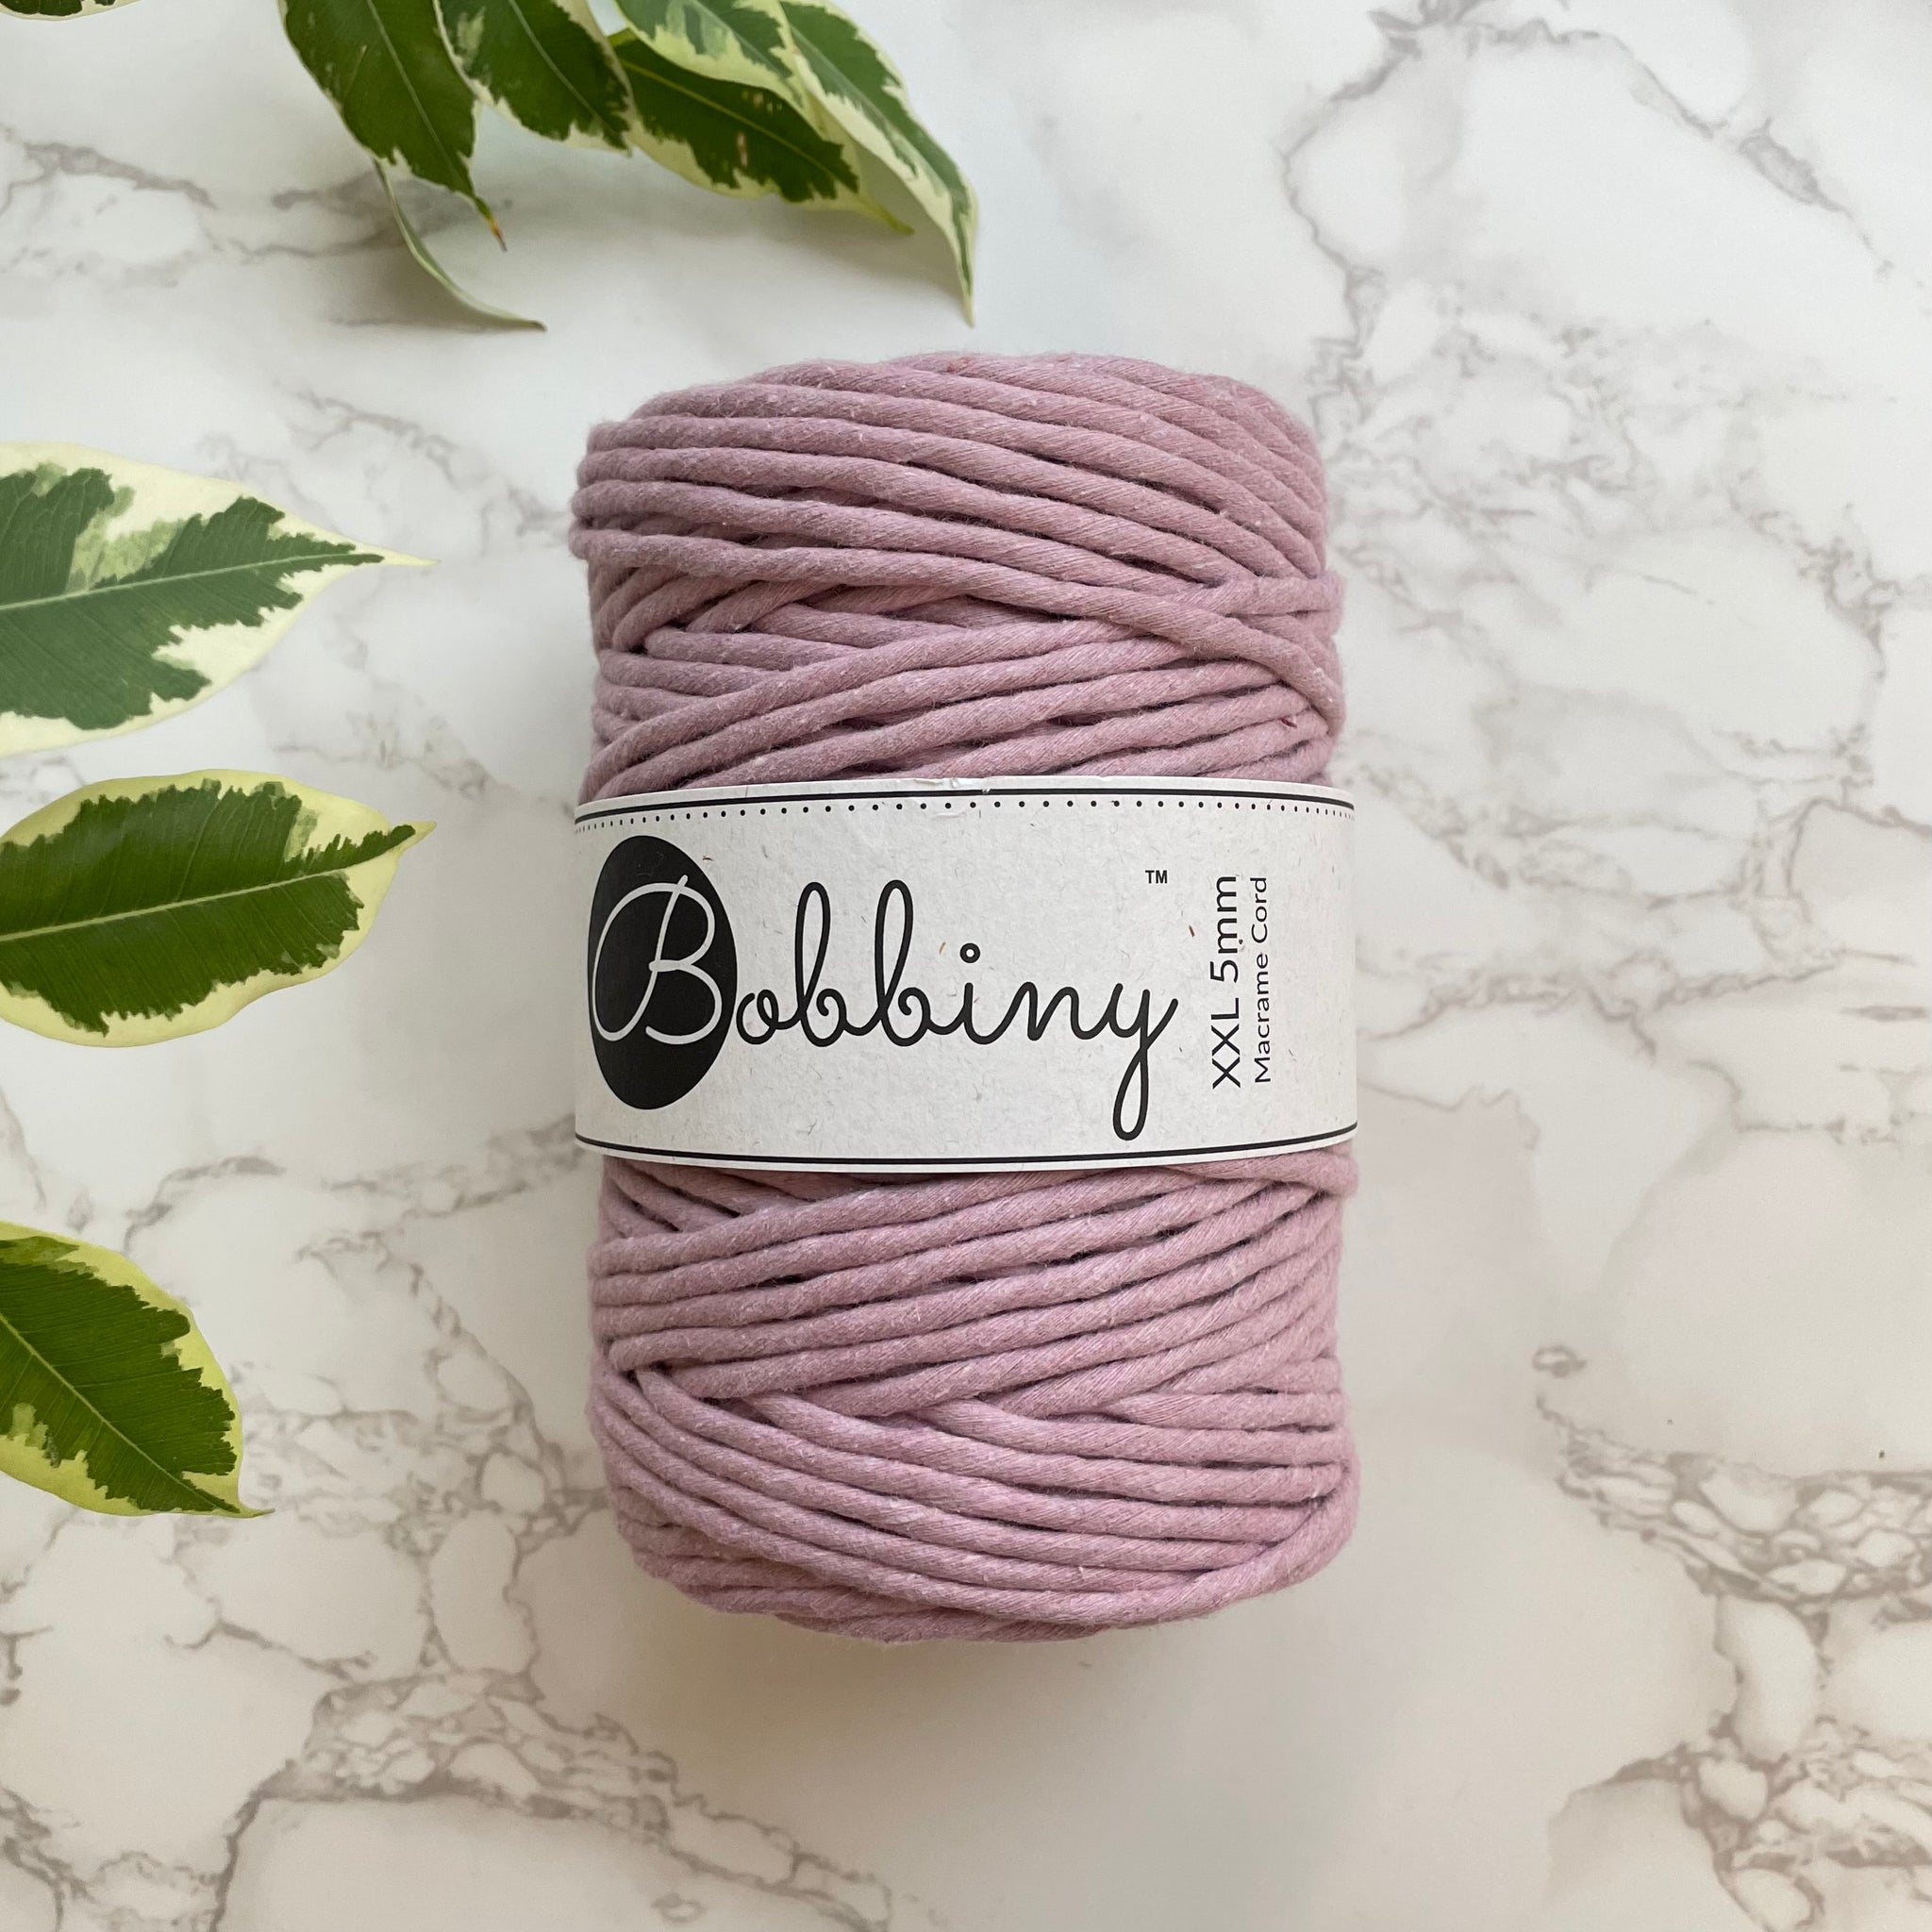 Bobbiny 5mm 'Dusty Pink' Cotton String - 100m